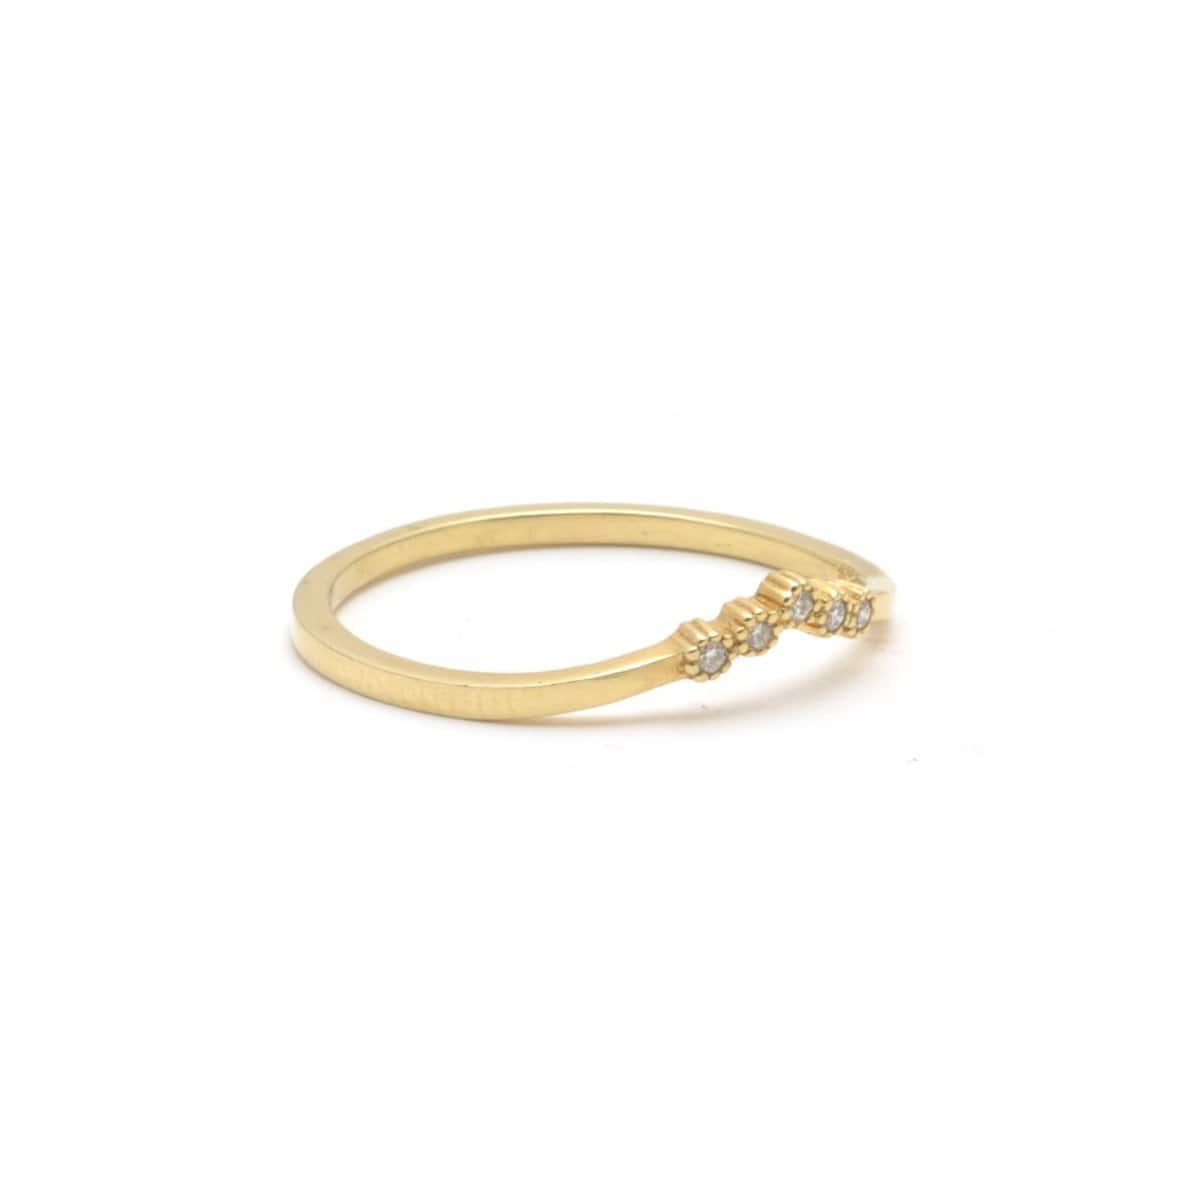 Suneera diamond yellow gold ring or wedding band